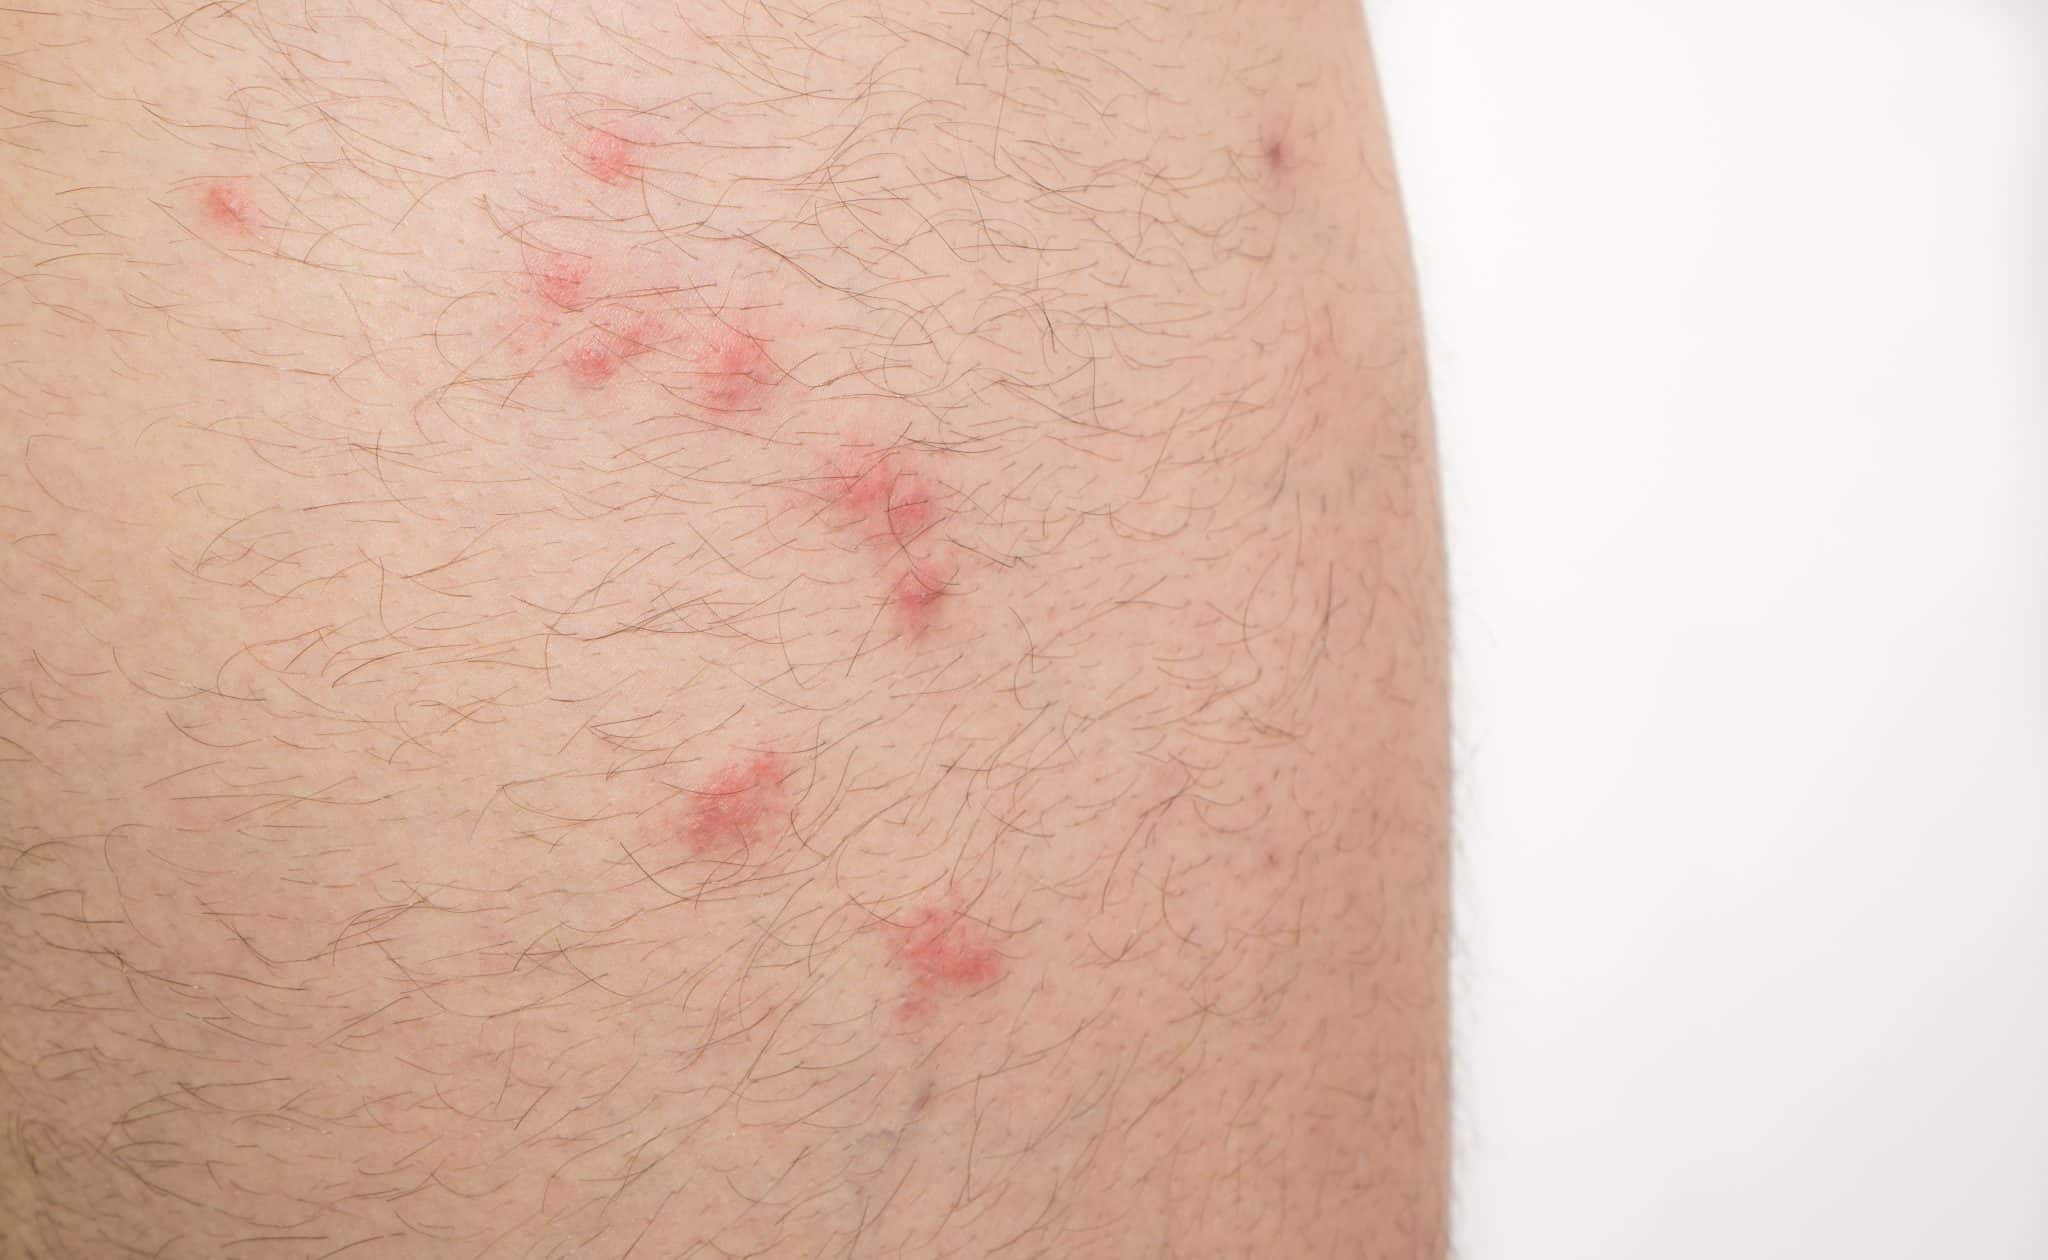 flea bites on leg